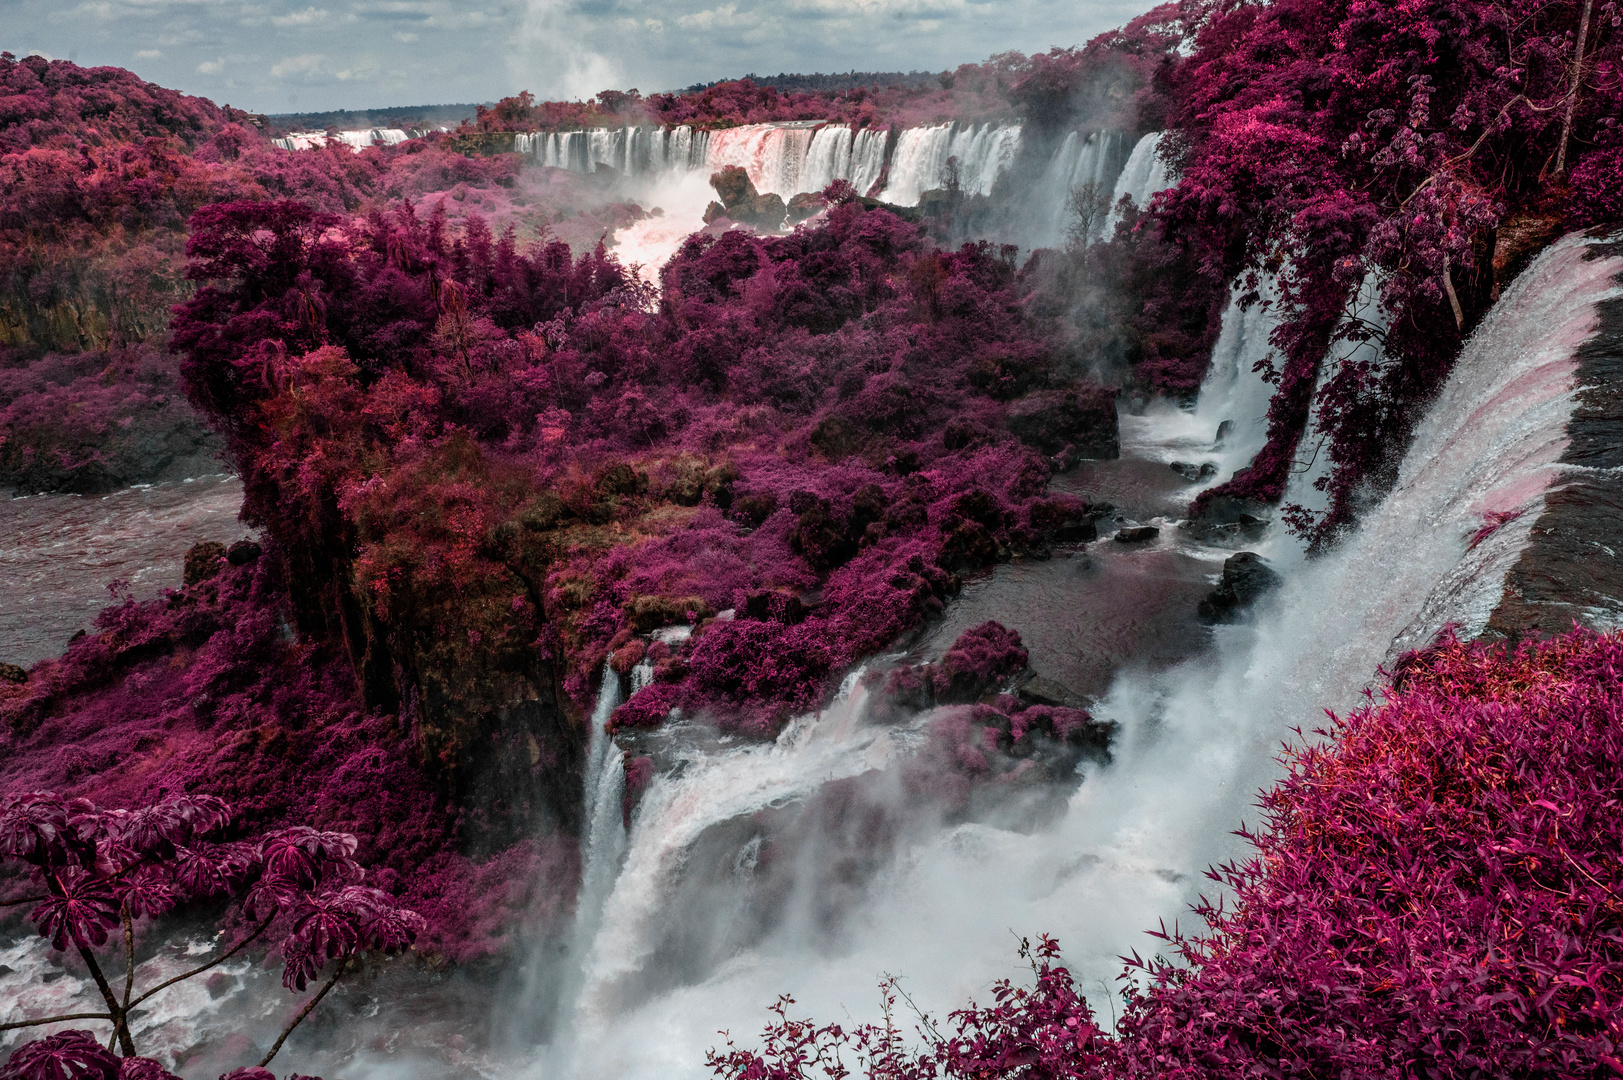 Cataratas do Iguaçu einmal in Rubinrot